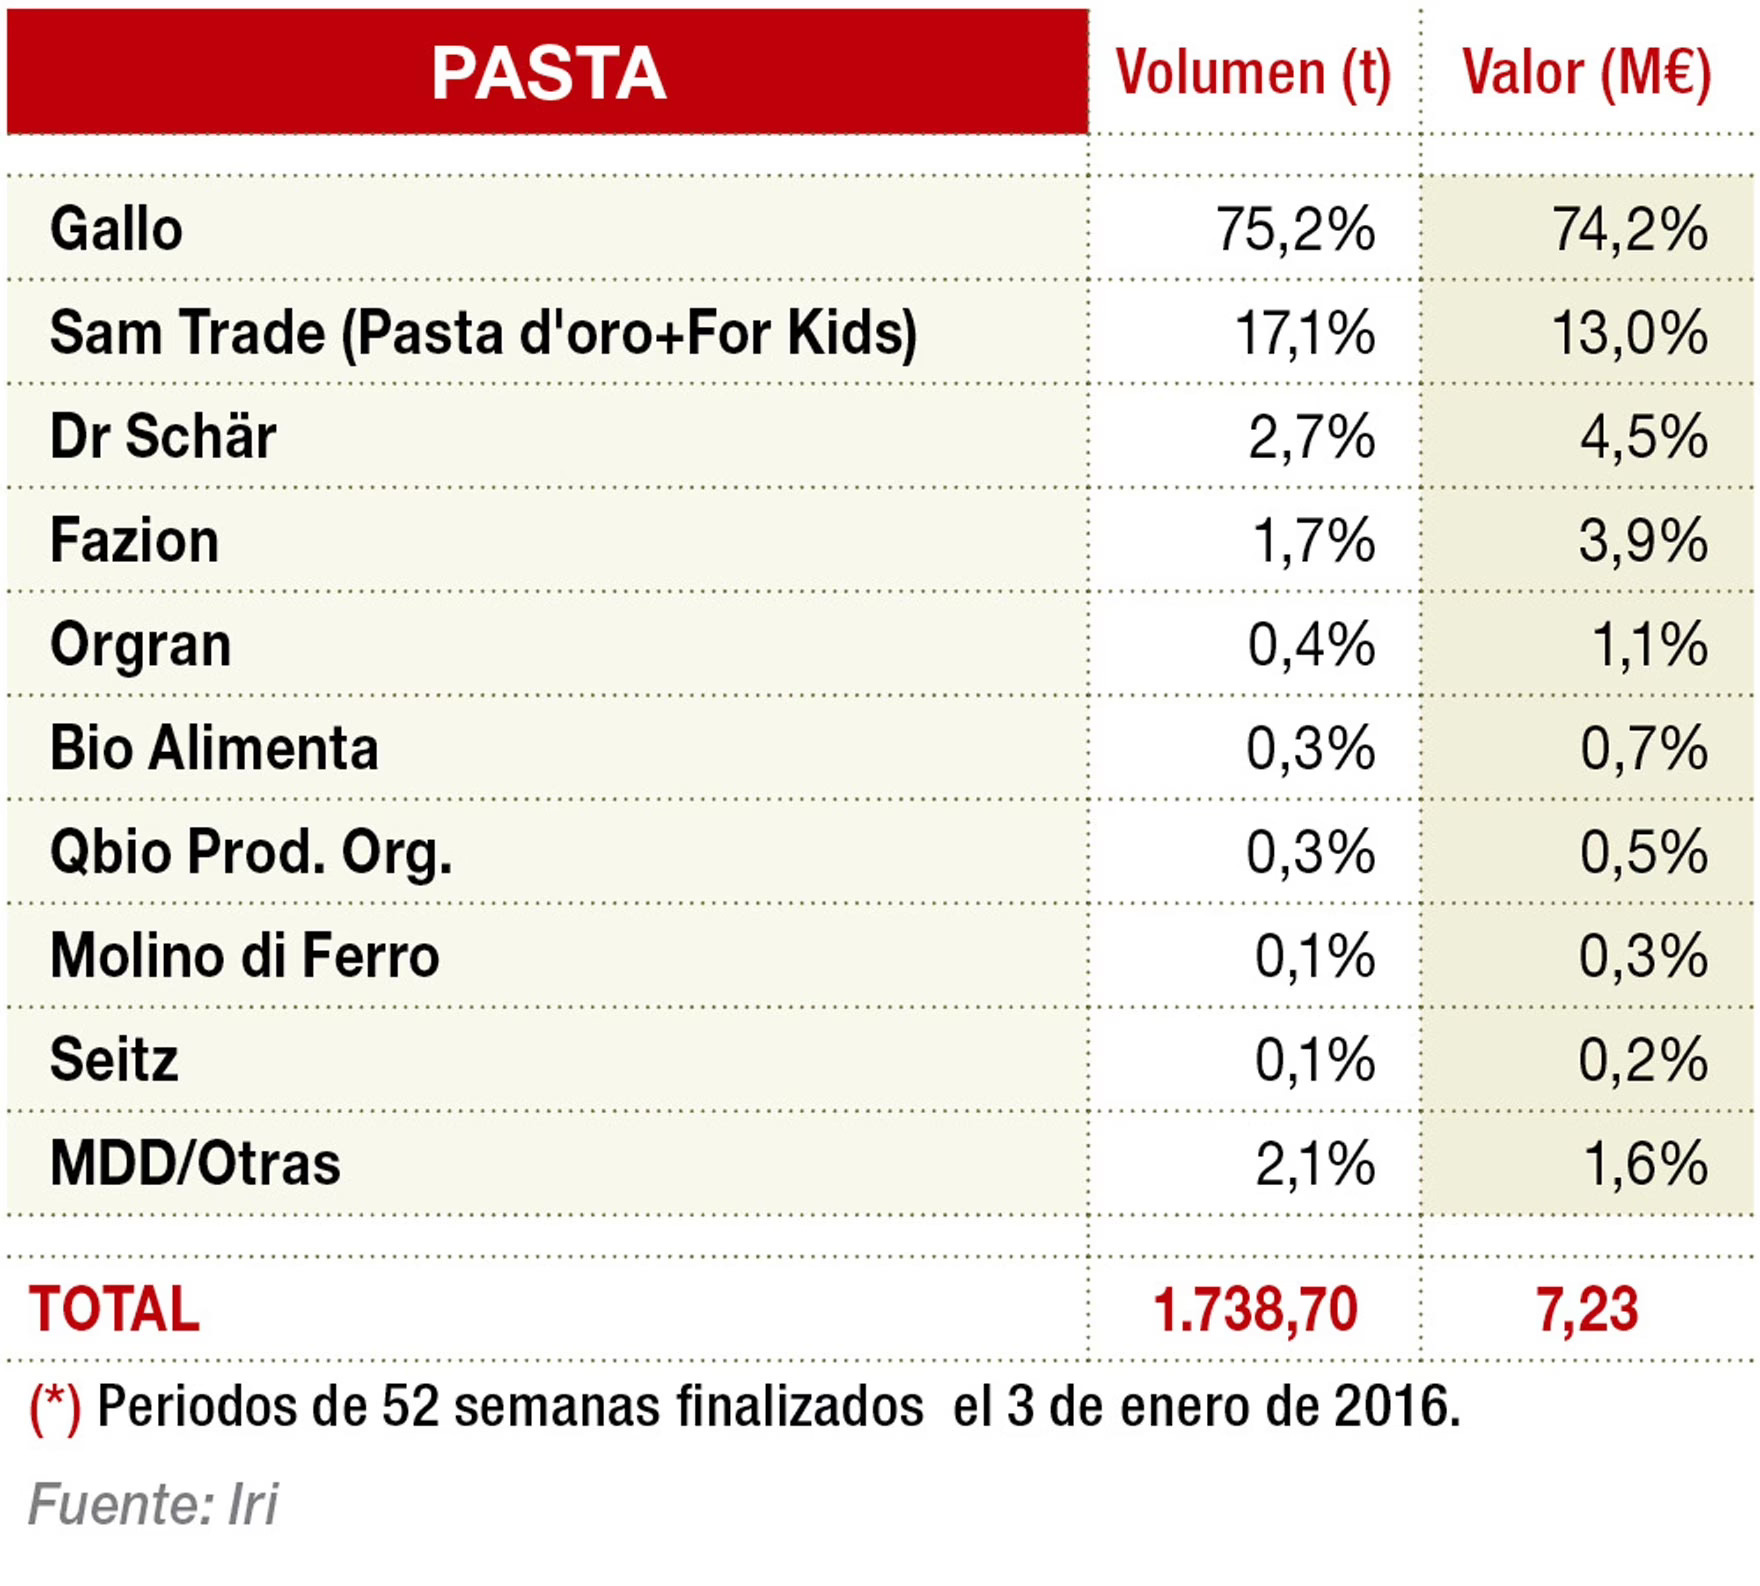 Principales marcas de alimentos sin gluten  en distribución moderna por categorías (2015)